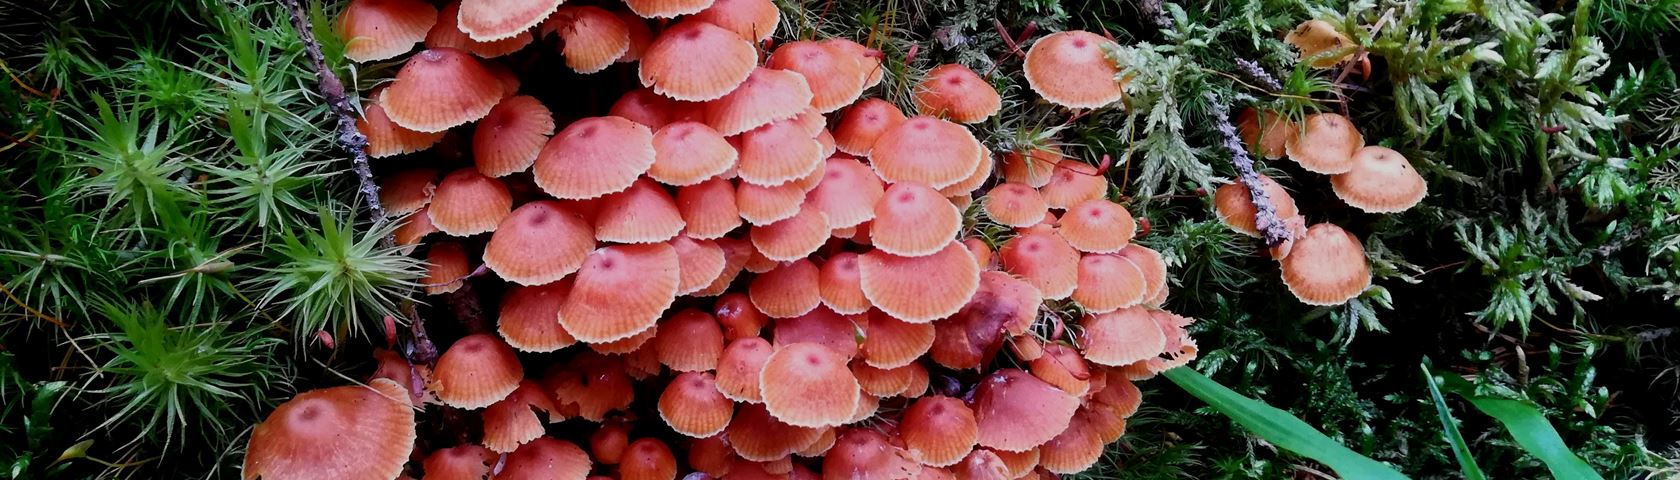 Lush Mushrooms